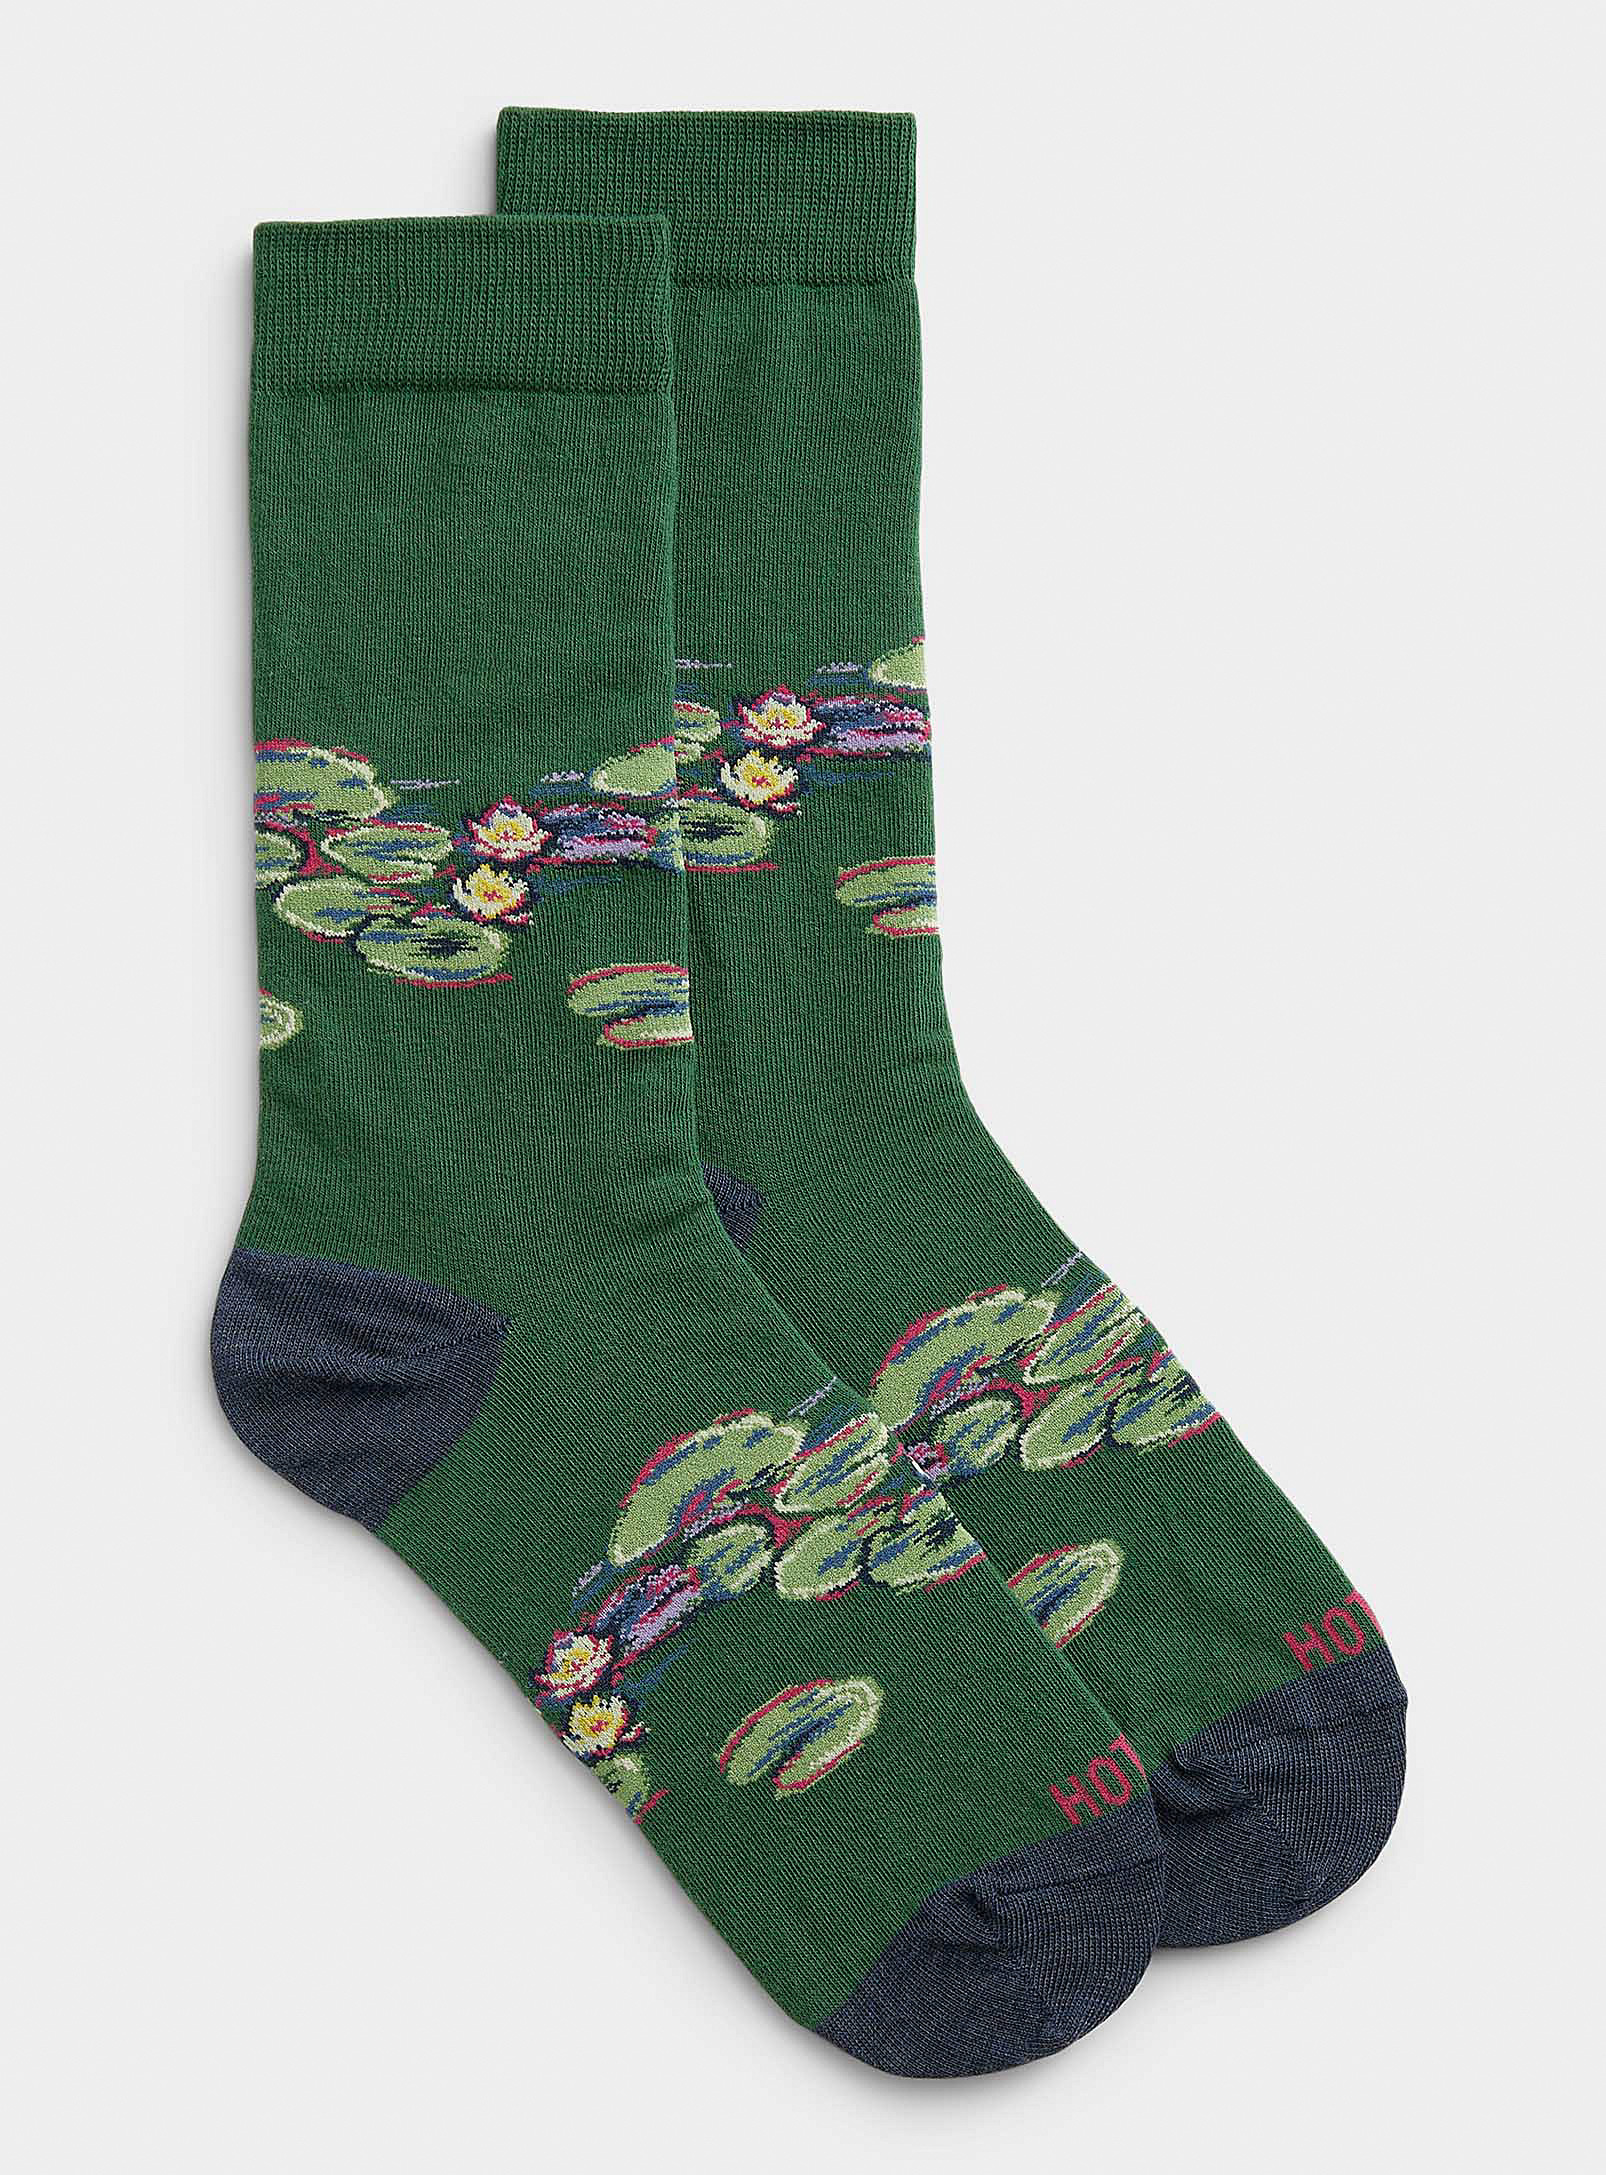 Hot Sox Monet's Water Lilies Sock In Green